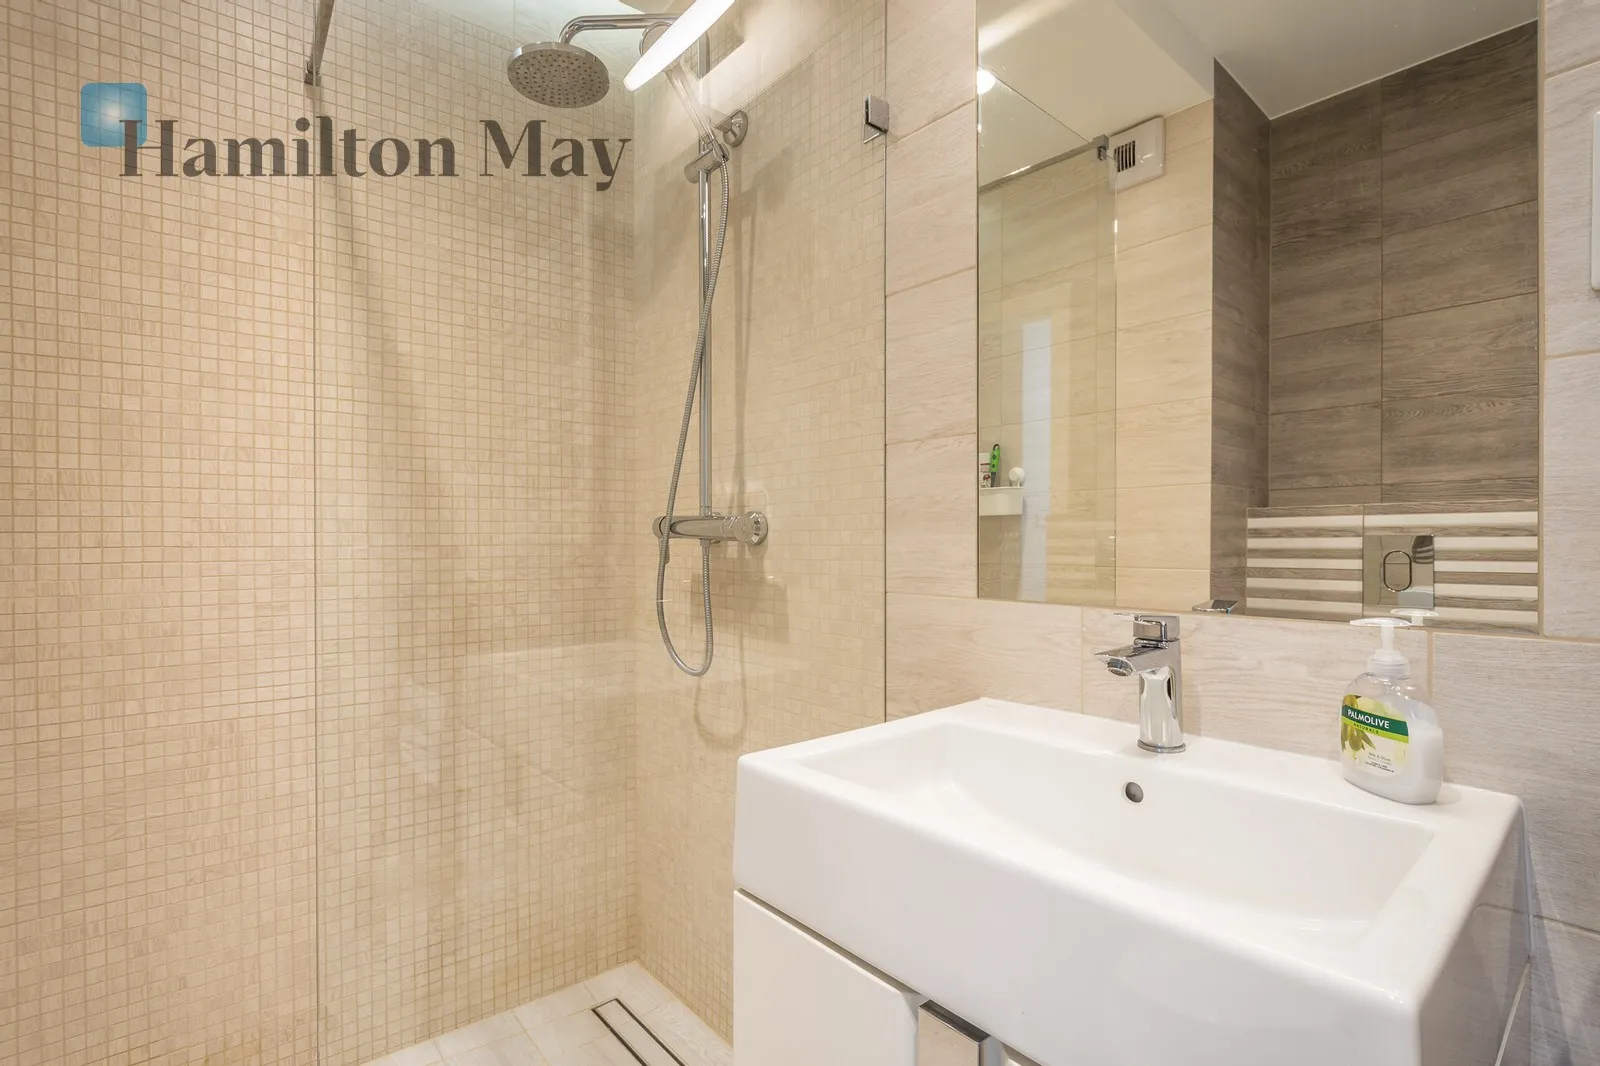 Level: 3 Price: 925000 PLN Bedrooms: 1 Bathrooms: 2 Size: 56.8m2